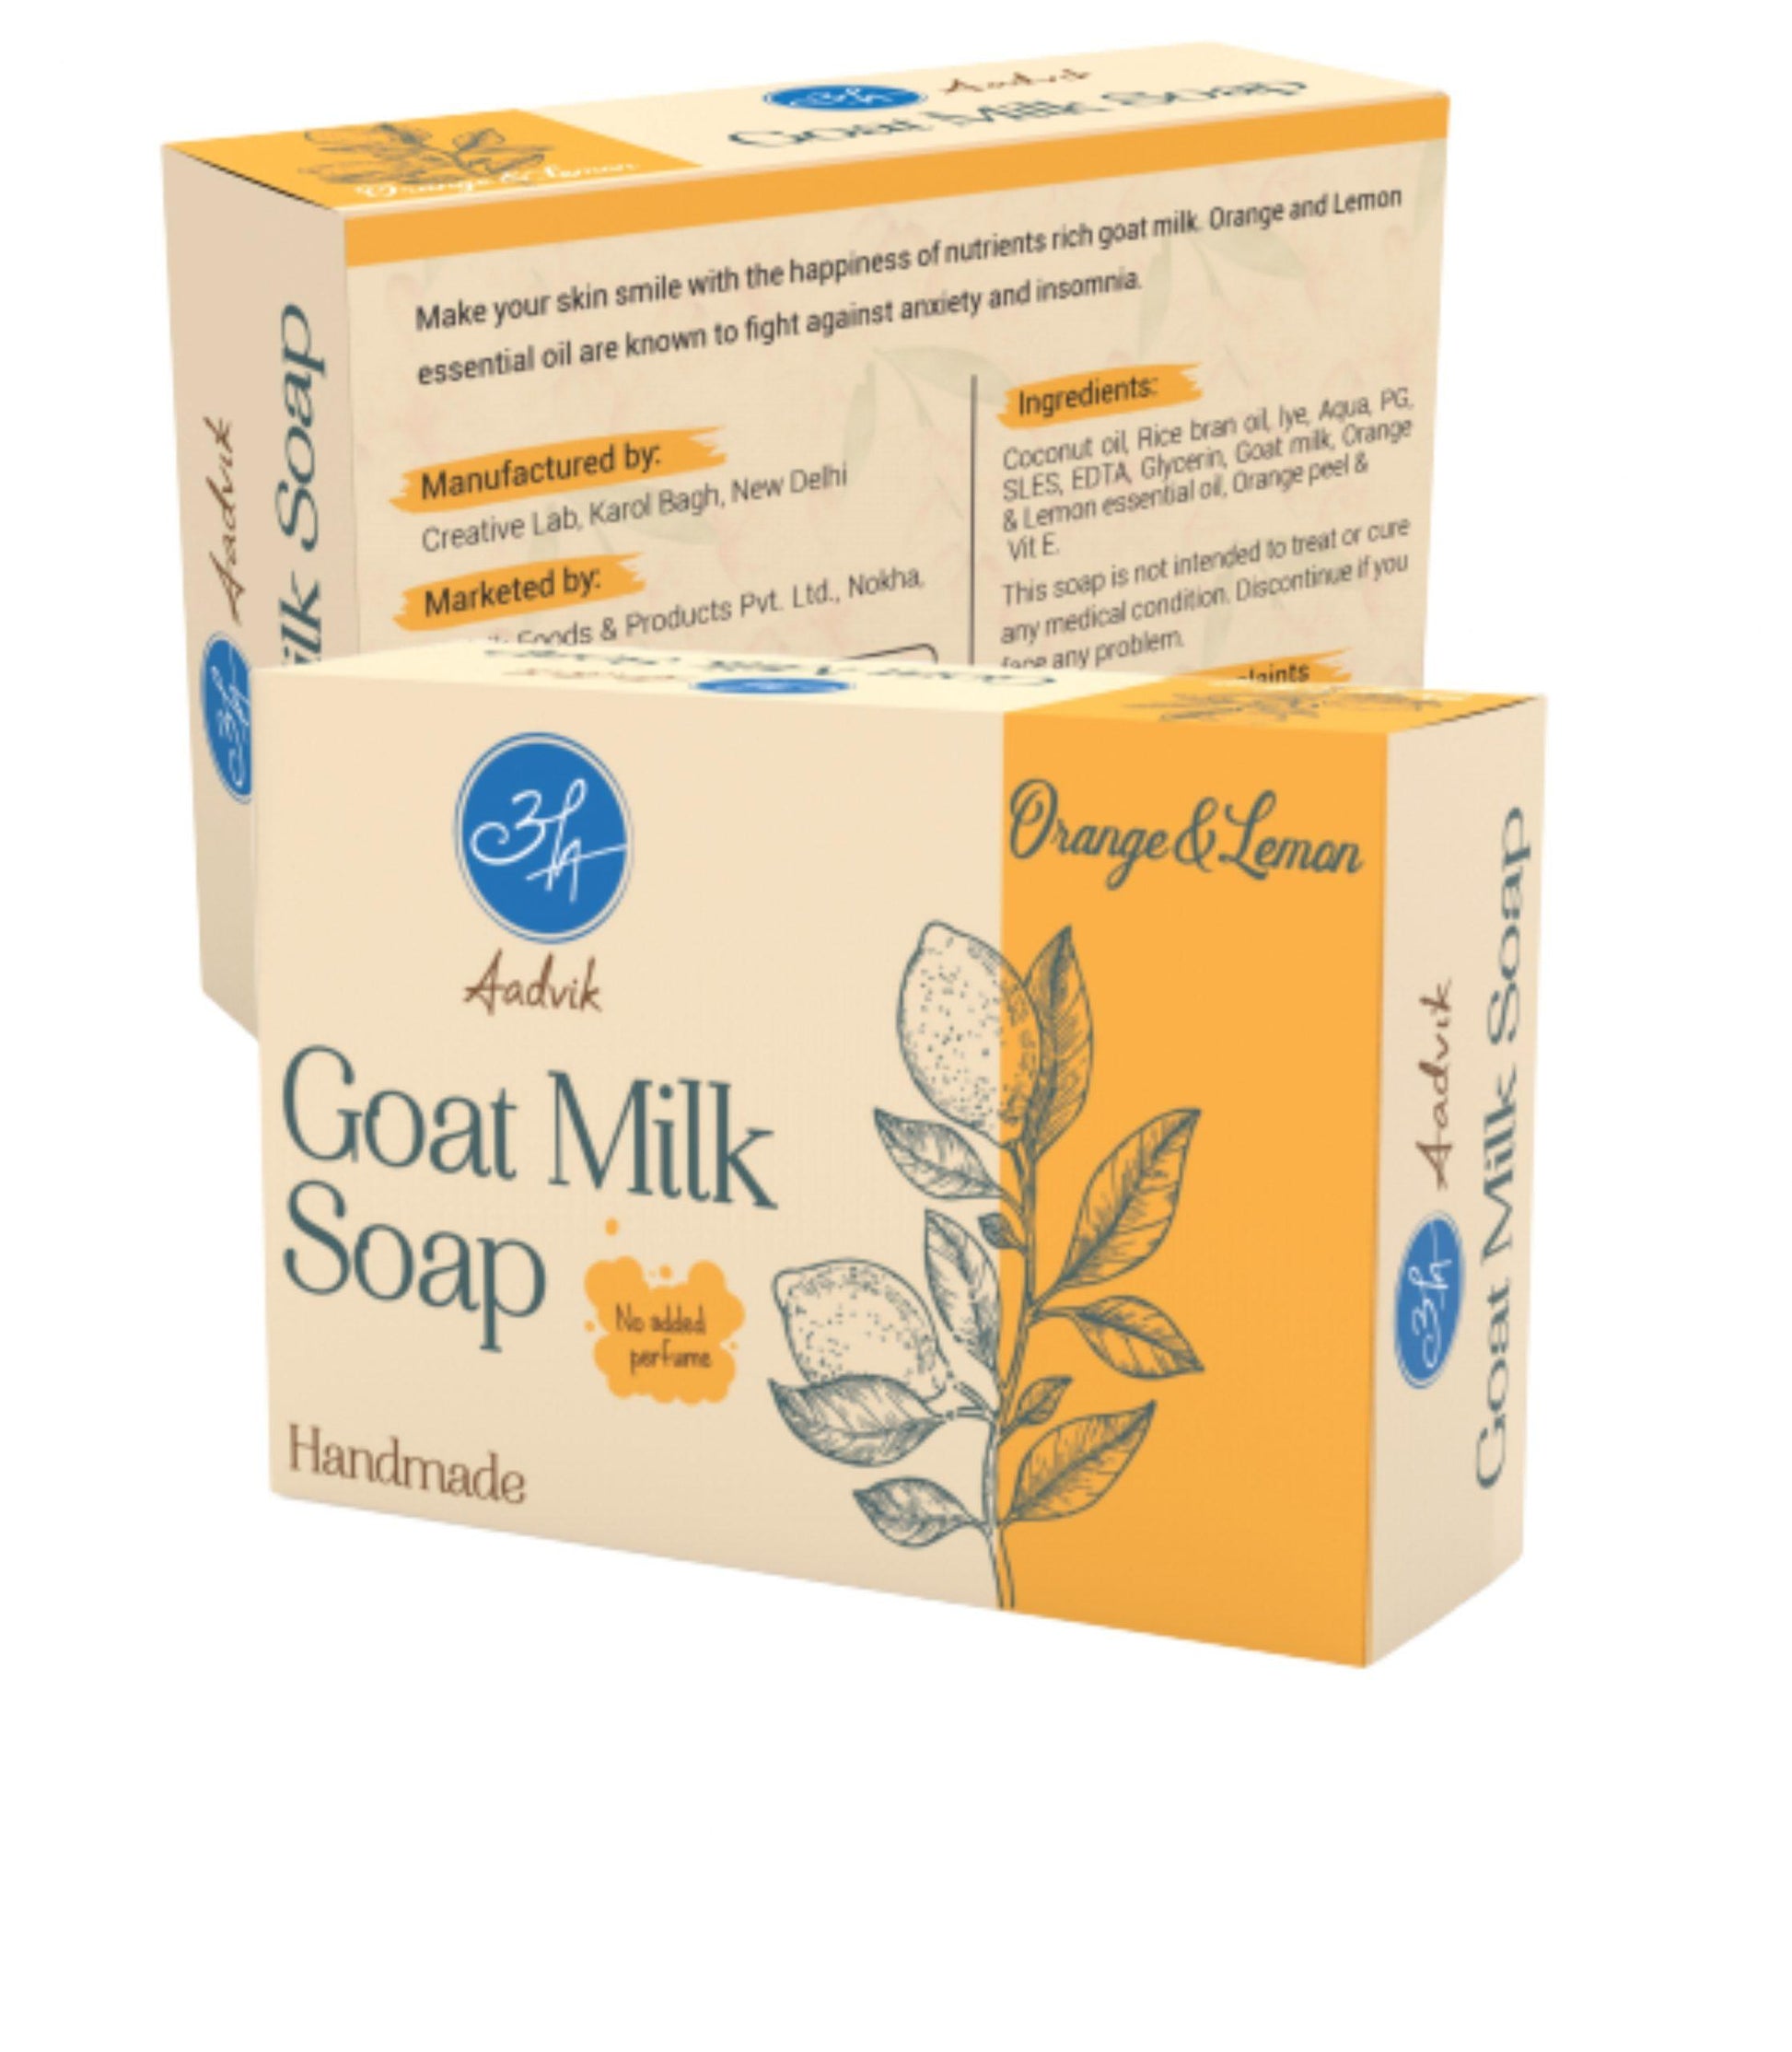 Goat Milk Soap | A Shark Tank Product |100g | Orange and Lemon - Aadvik Foods